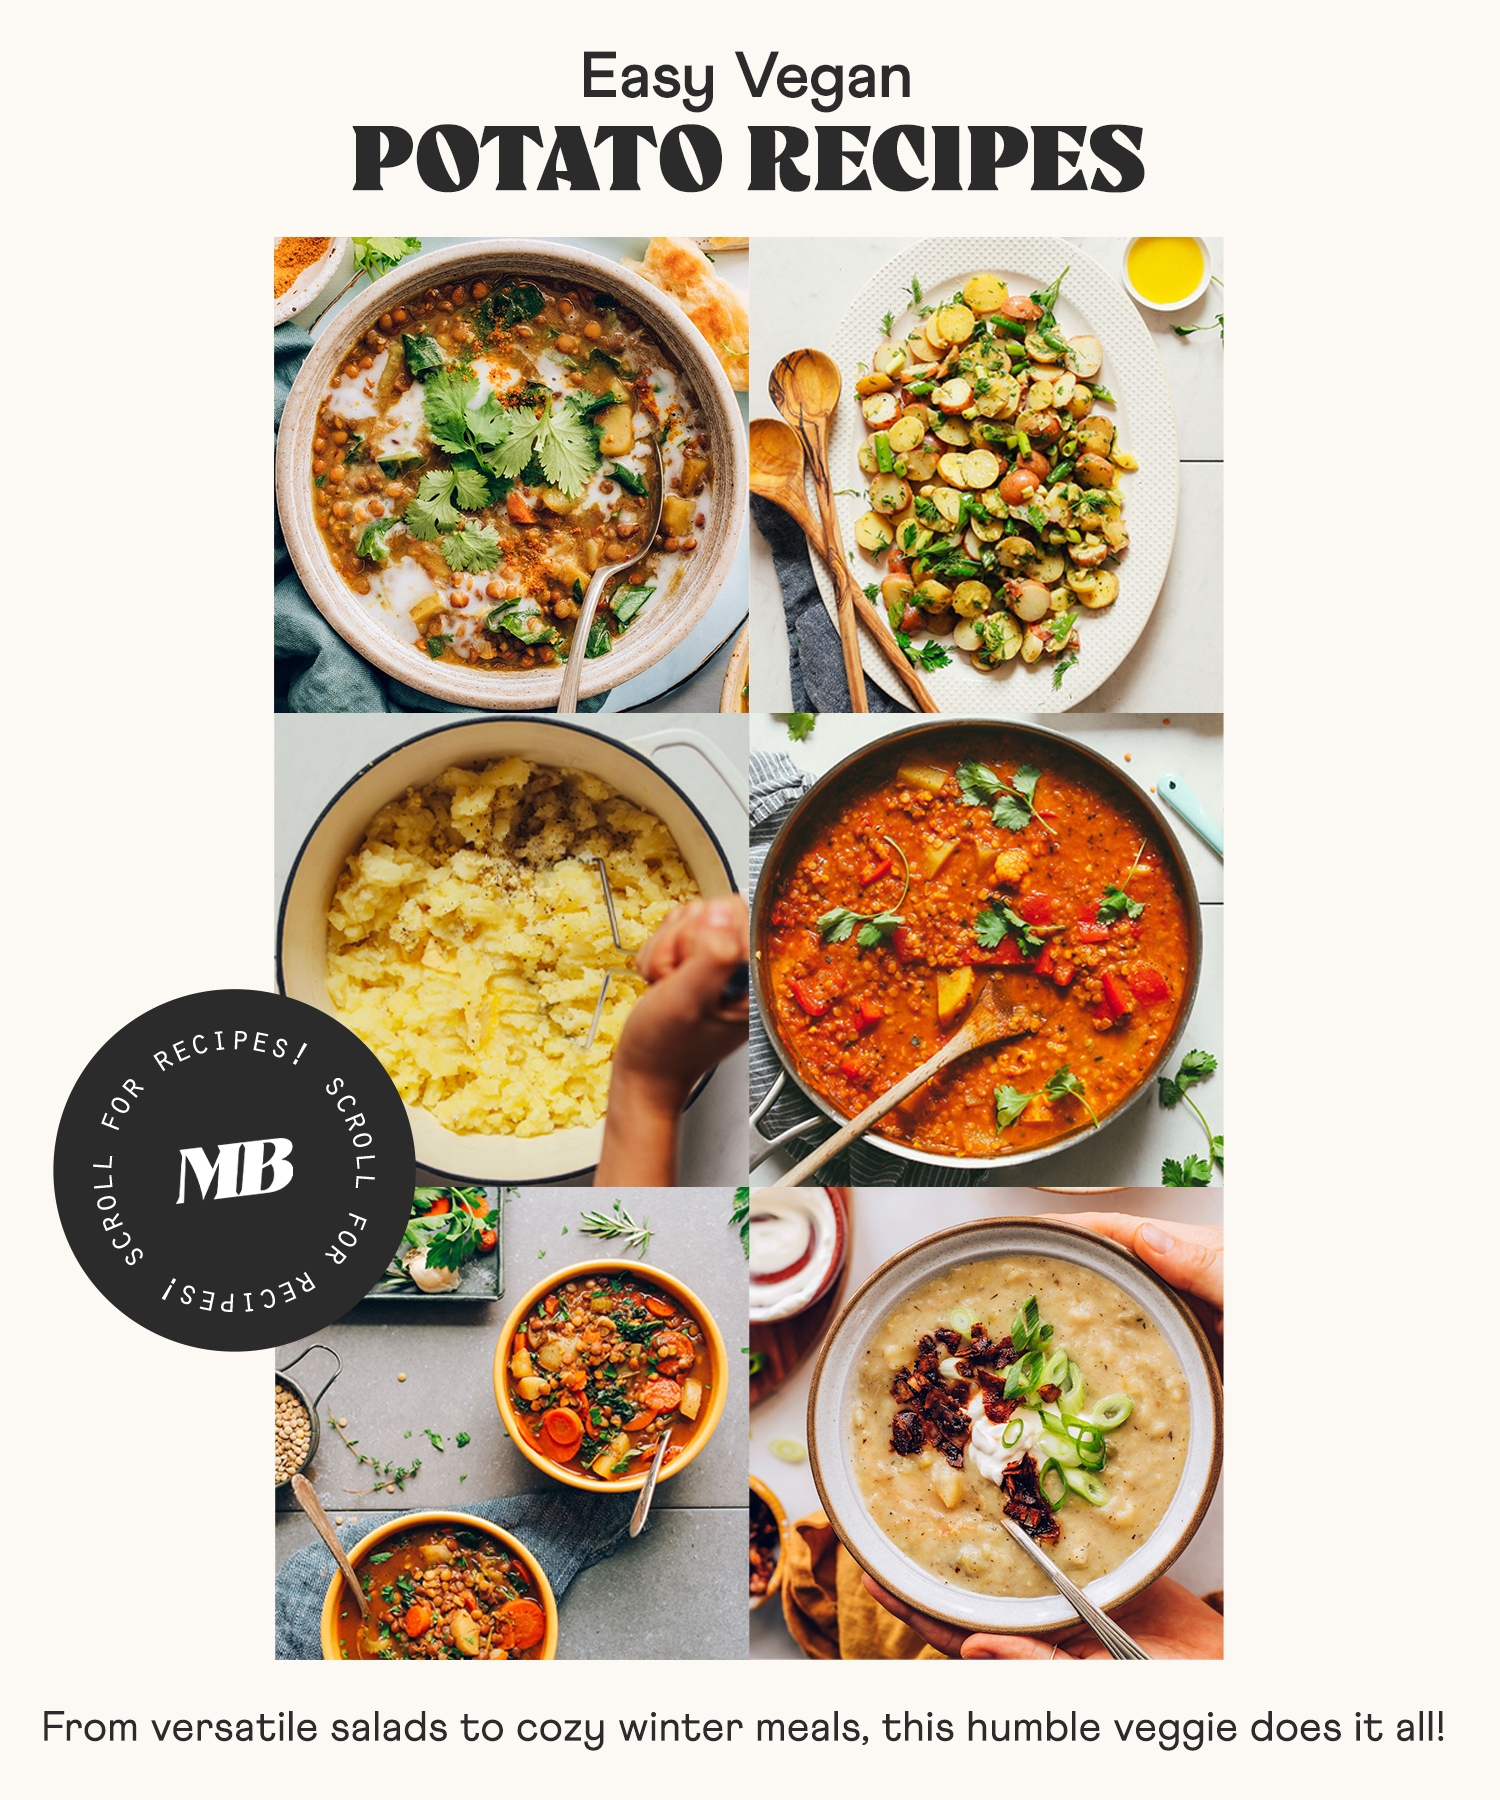 Images of easy vegan potato recipes